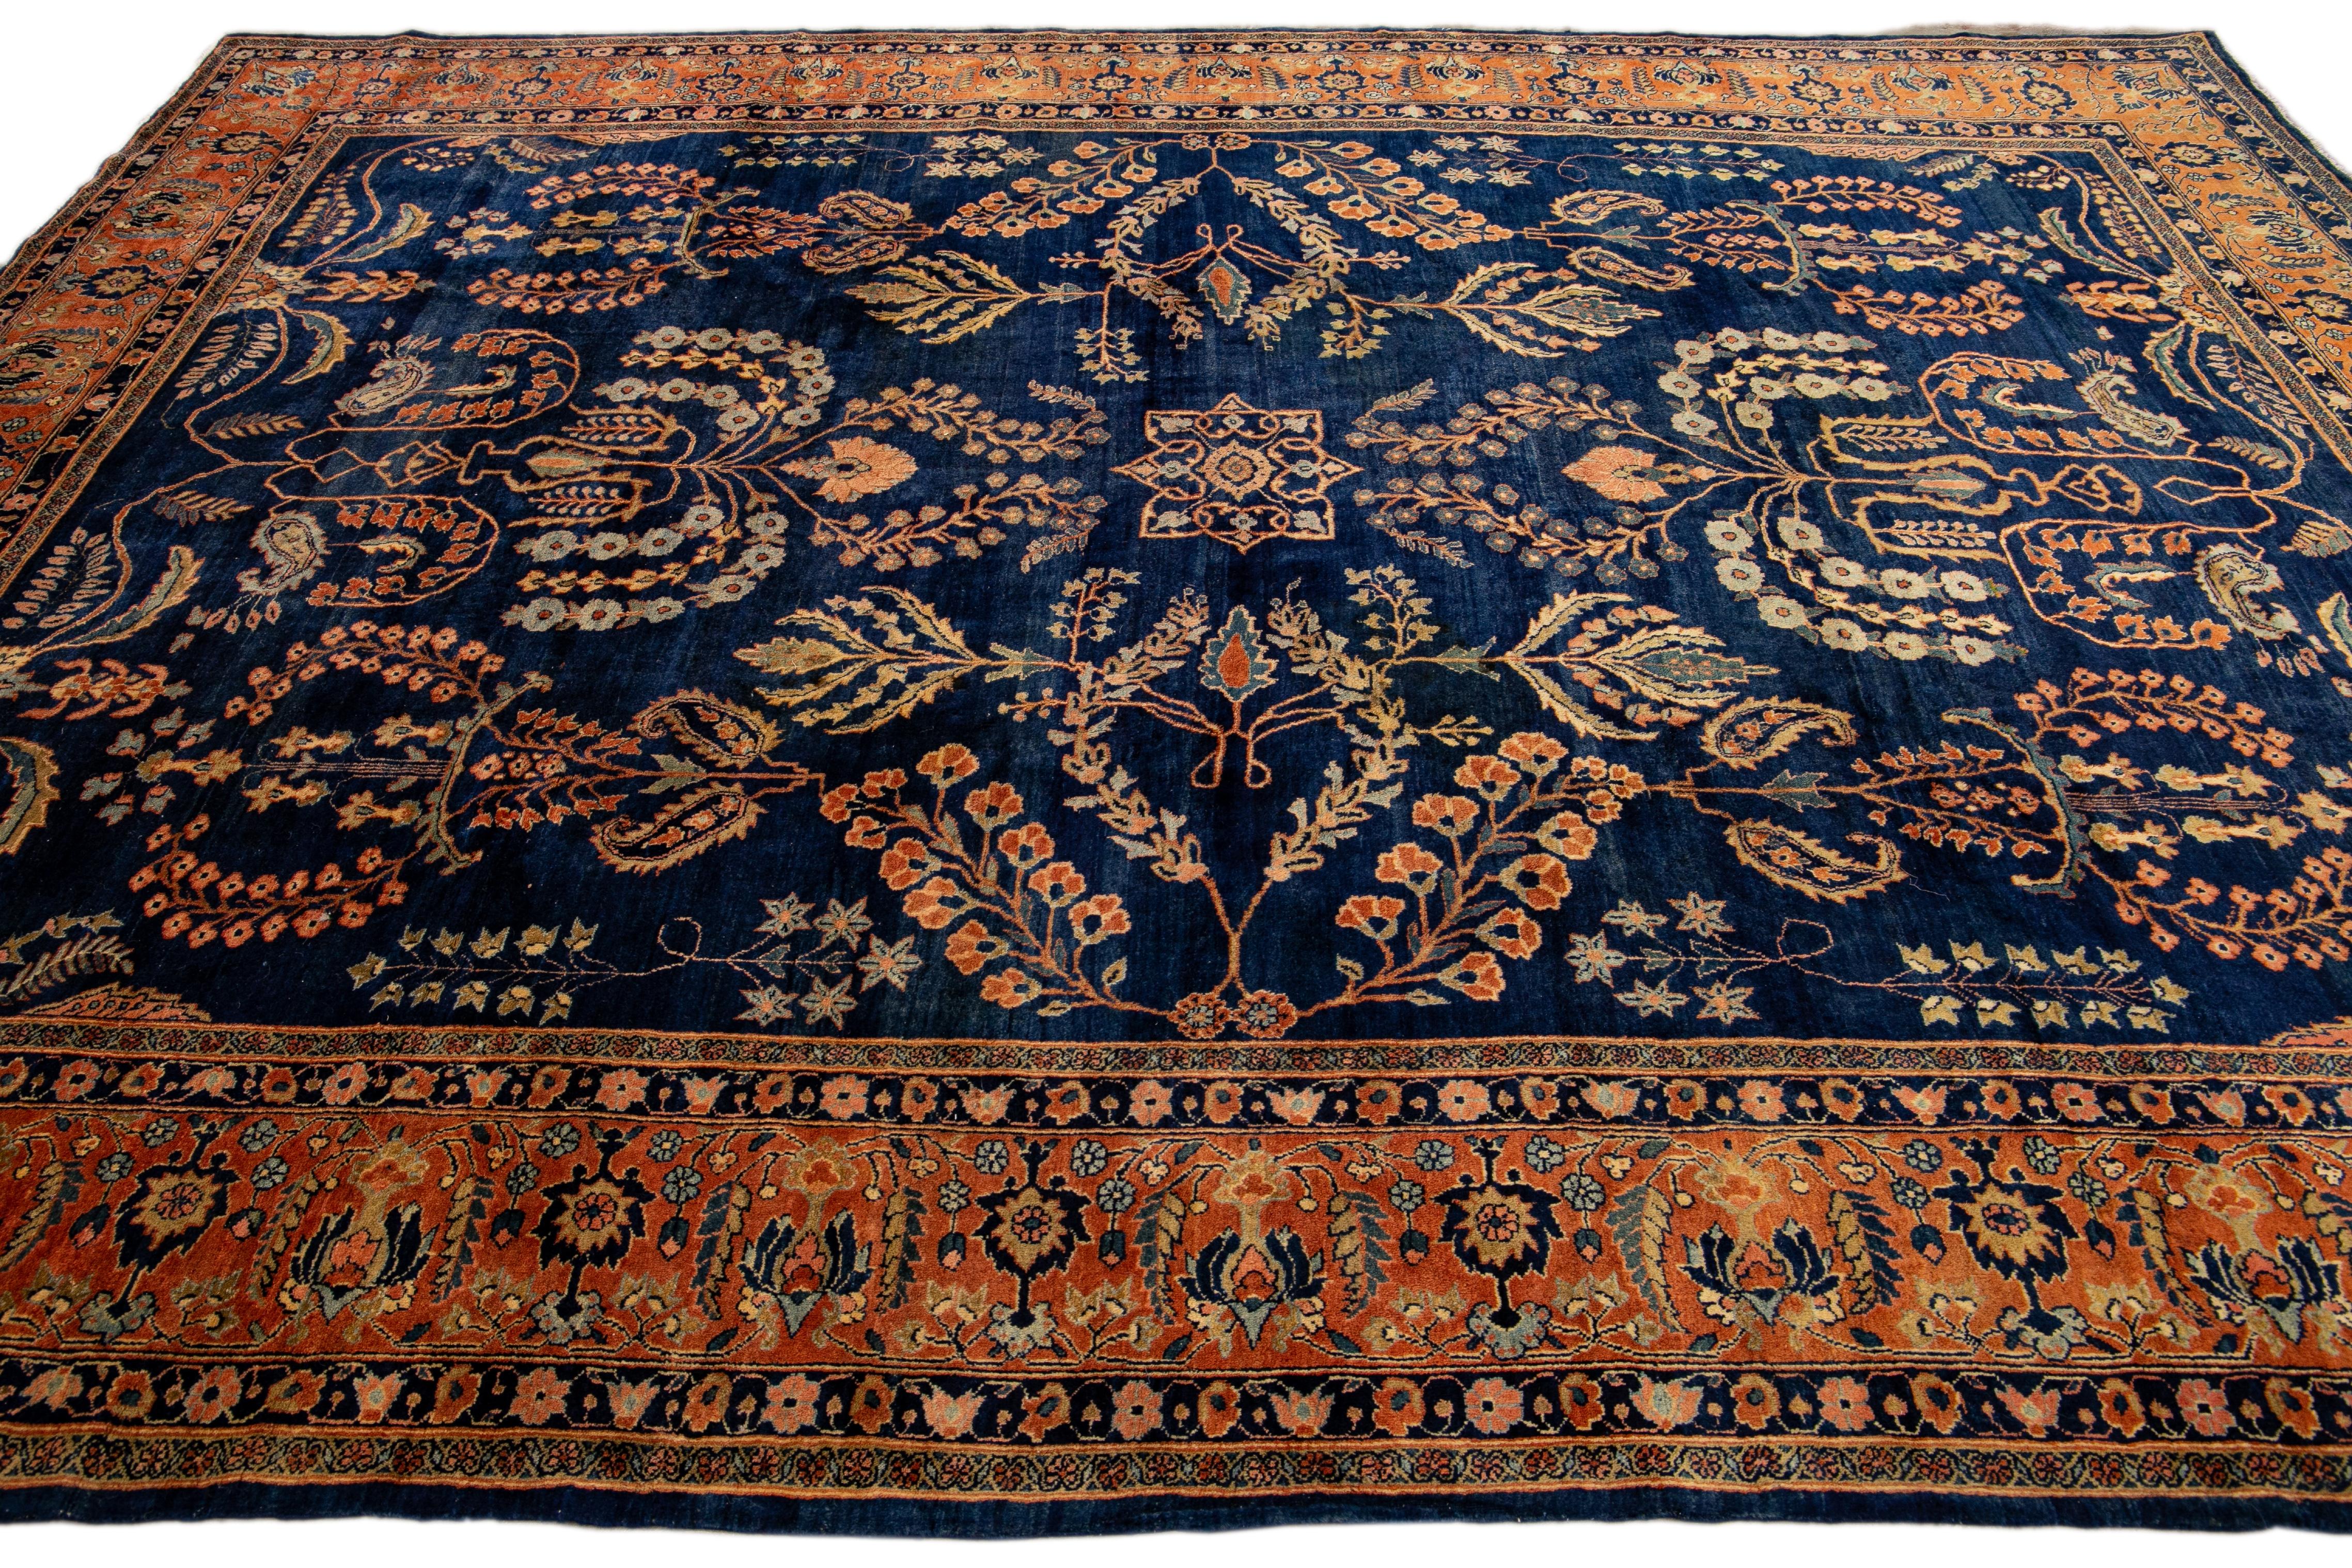 20th Century Antique Persian Sarouk Farahan Handmade Allover Designed Navy Blue Wool Rug For Sale